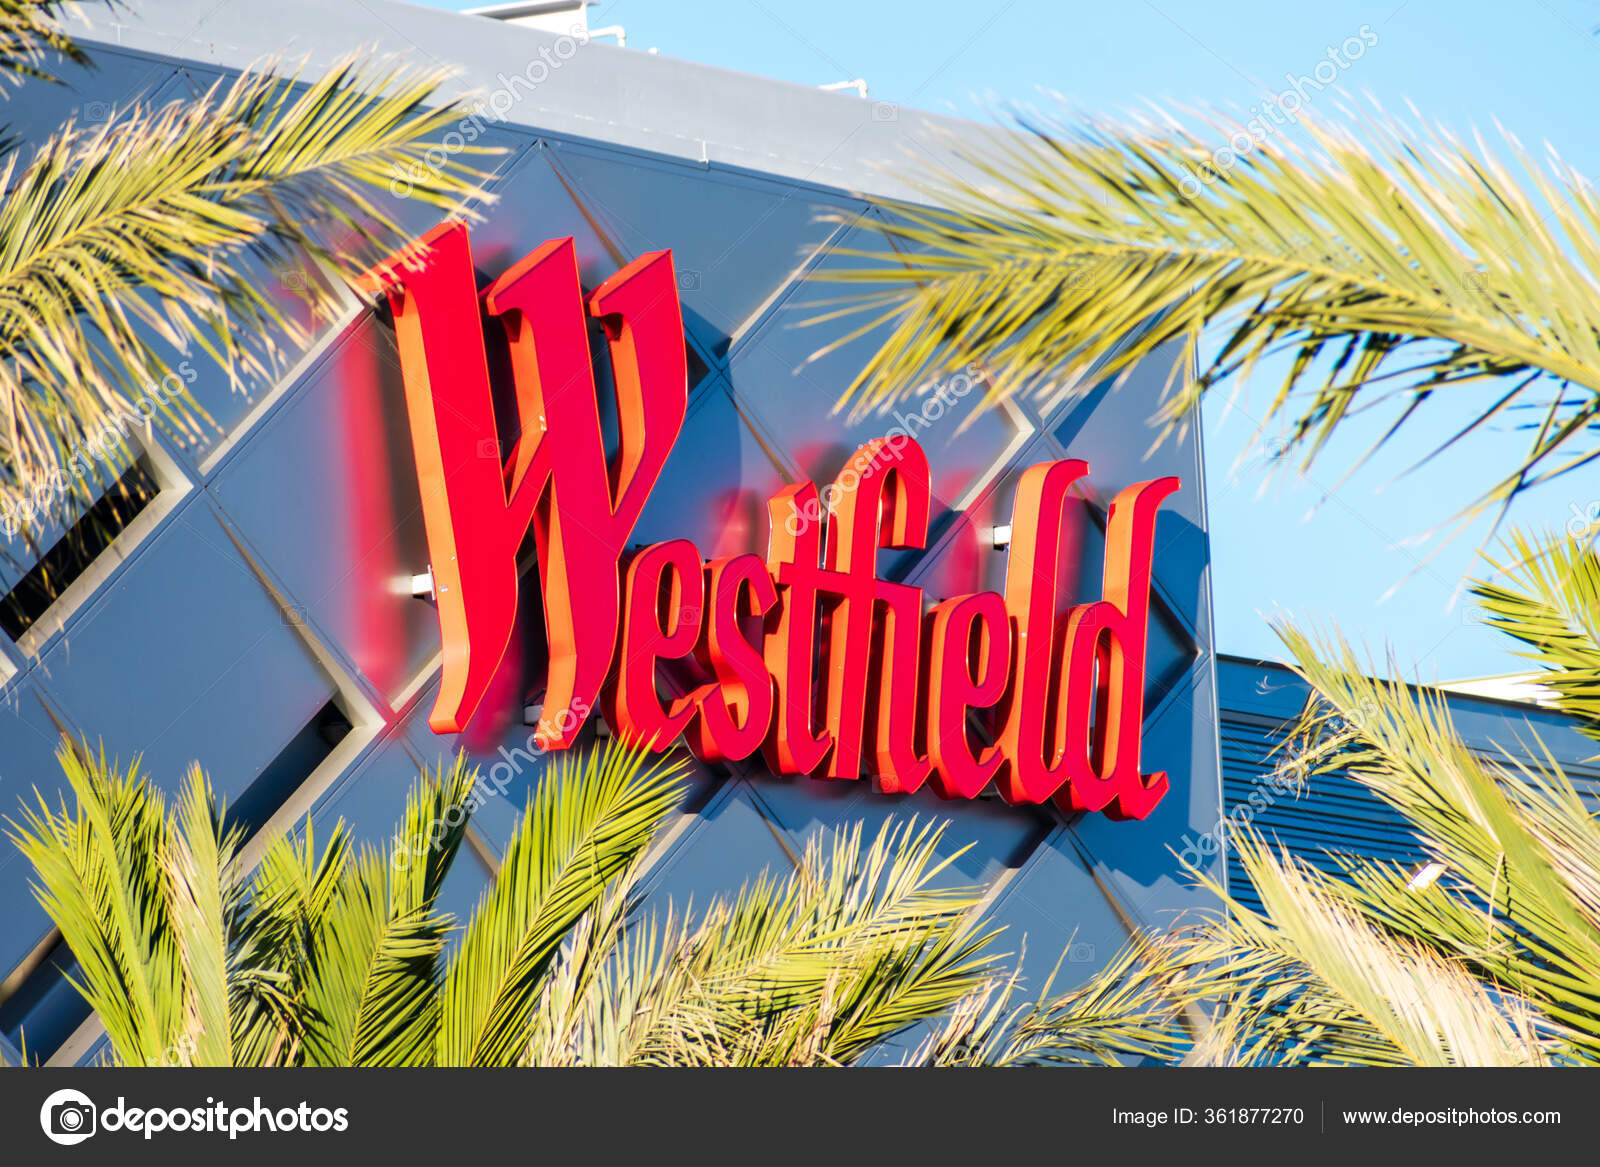 Westfield Valley Fair Mall - Skylights